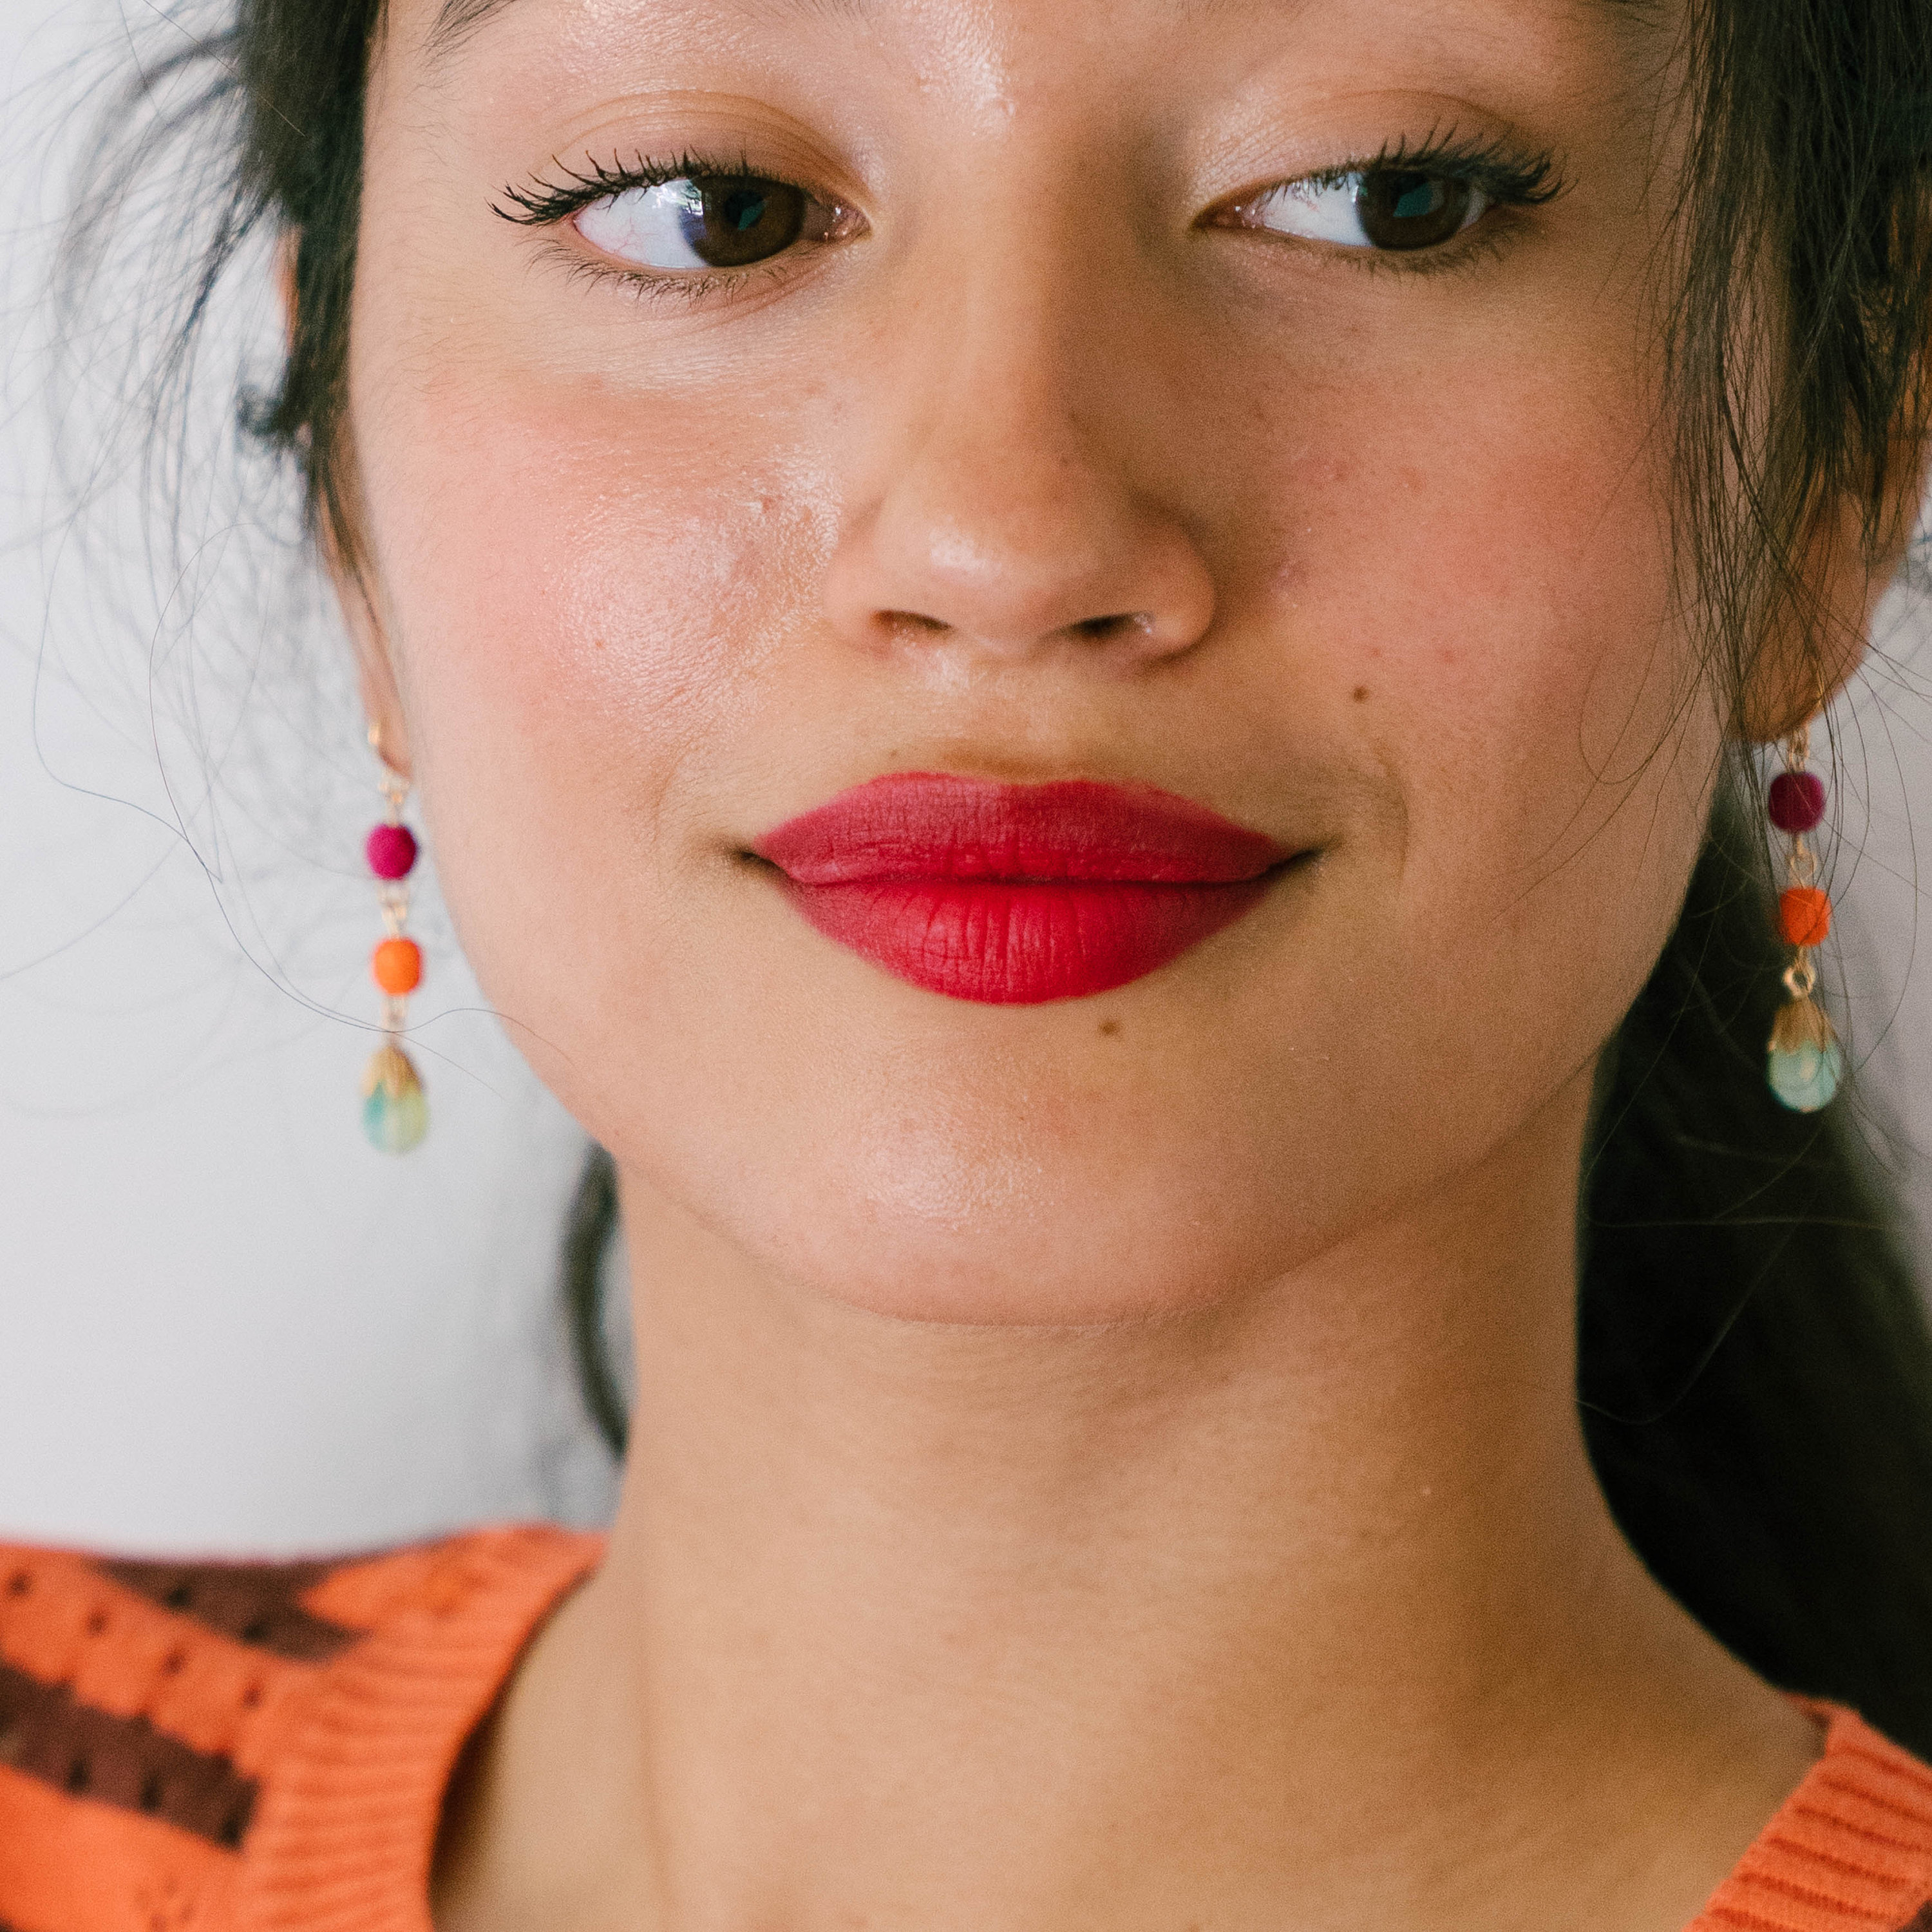 Beaded Hello Kitty Earrings – Victoria Donna